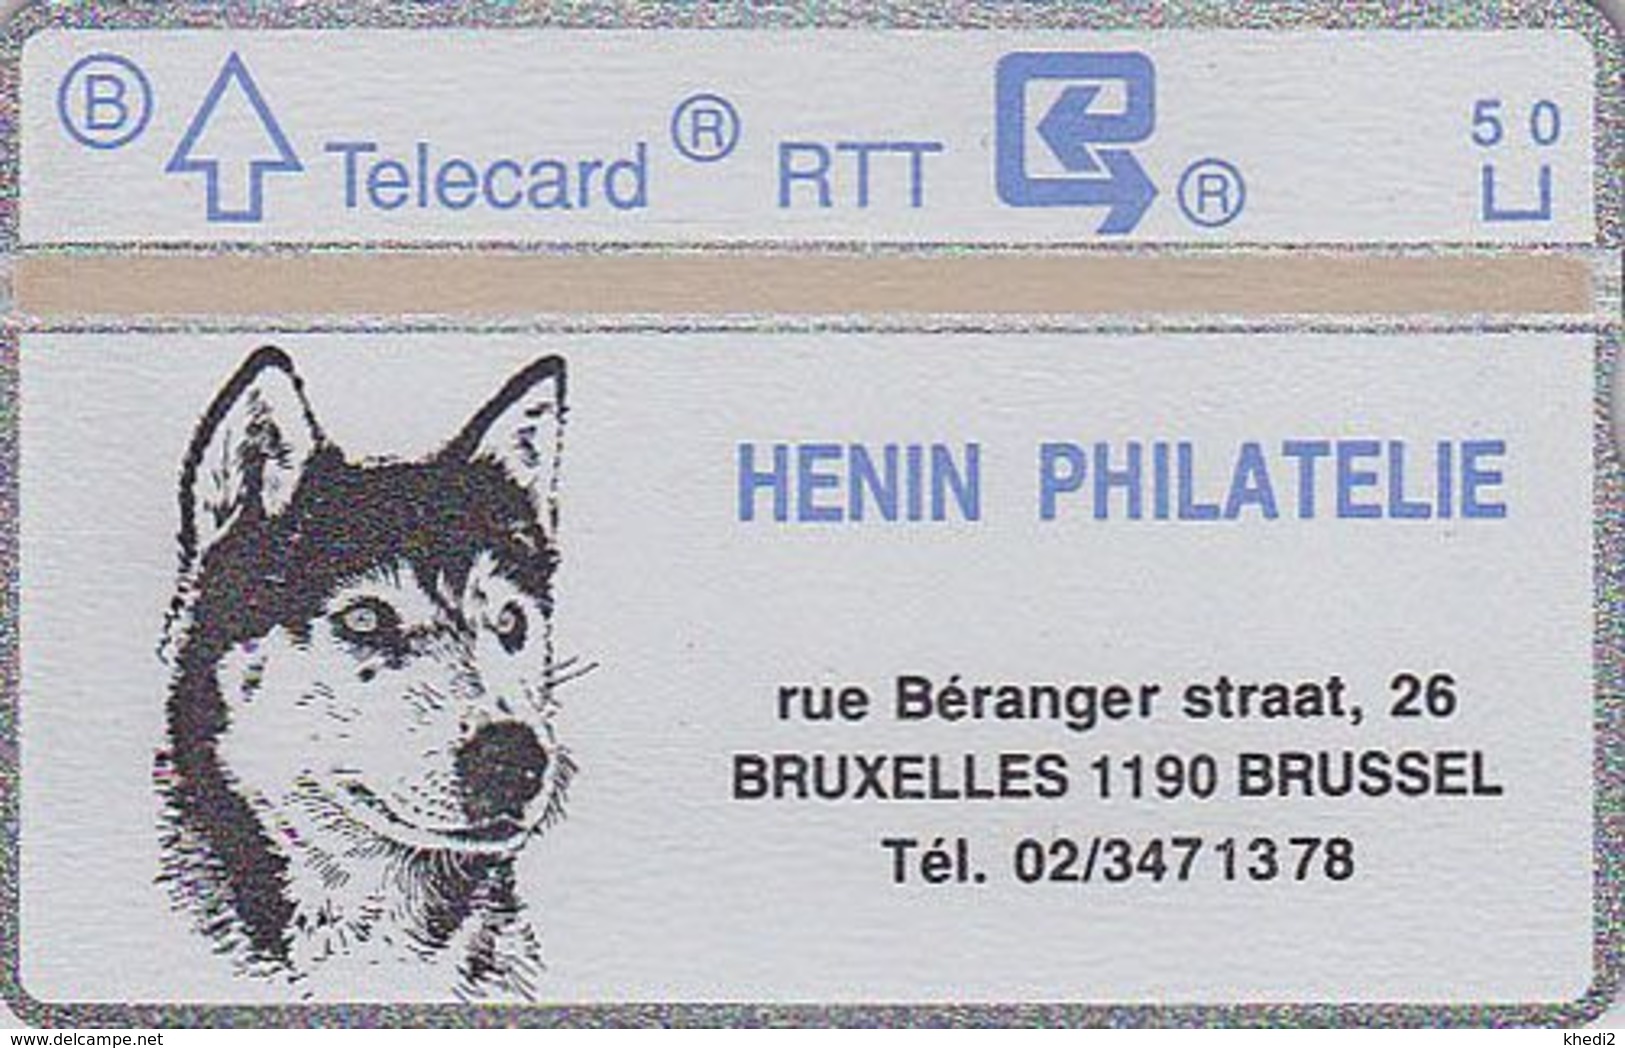 Télécarte Privée De Belgique LG L&G NEUVE - ANIMAL - CHIEN HUSKY  - DOG MINT Phonecard - HUND Telefonkarte - 588 - Senza Chip